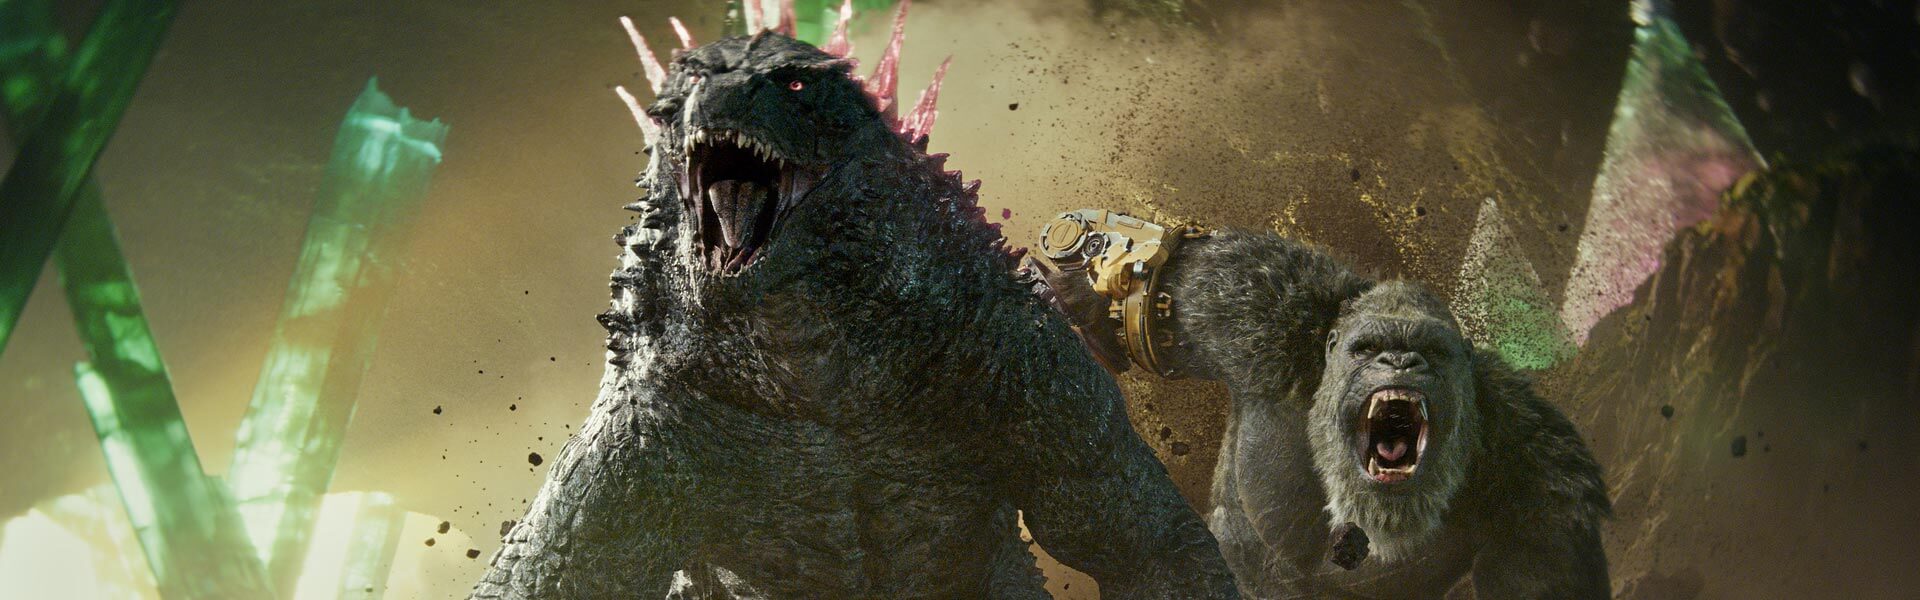 Crítica de ‘Godzilla e Kong’: cinema de “monster trucks”